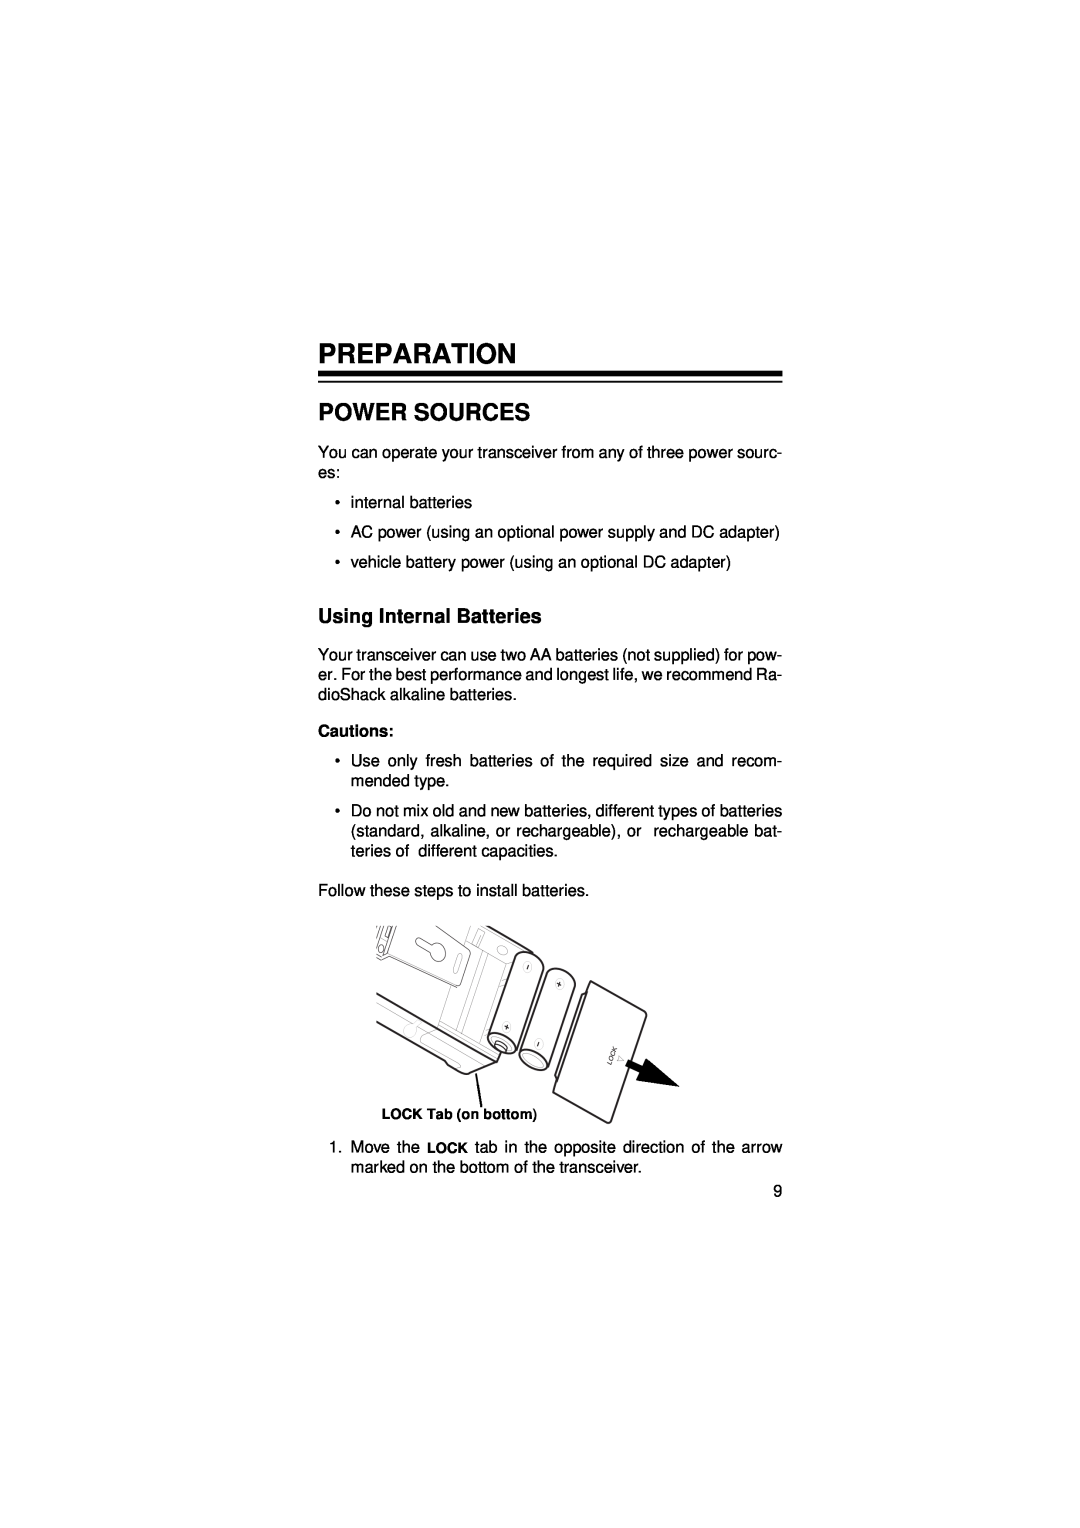 Radio Shack HTX-200 owner manual Preparation, Power Sources, Using Internal Batteries 